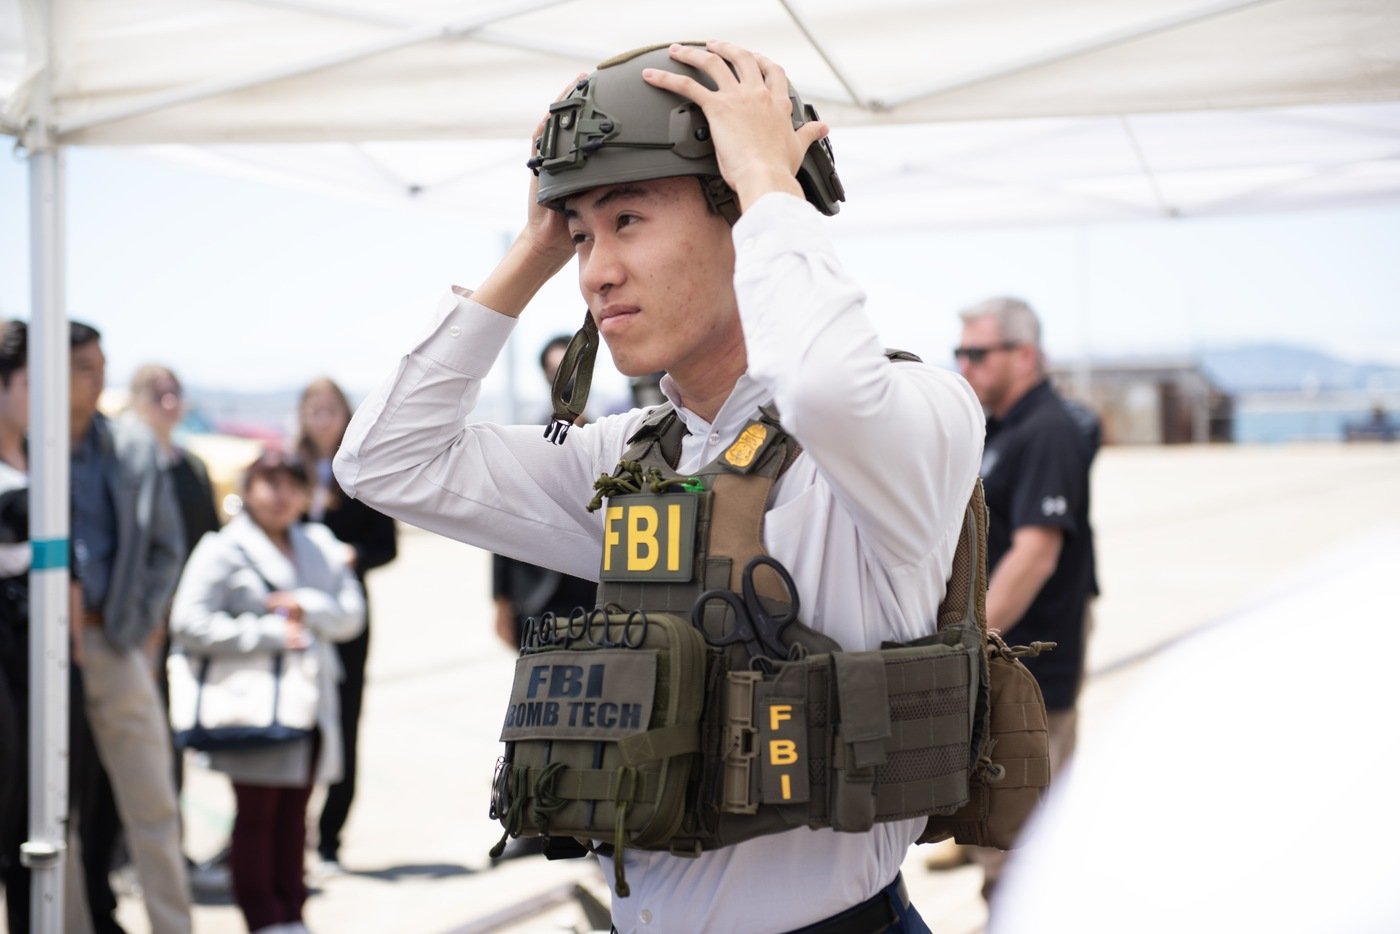 A Teen Academy student tries on bomb technician body armor and a helmet during an FBI San Francisco Teen Academy held in Alameda, California.